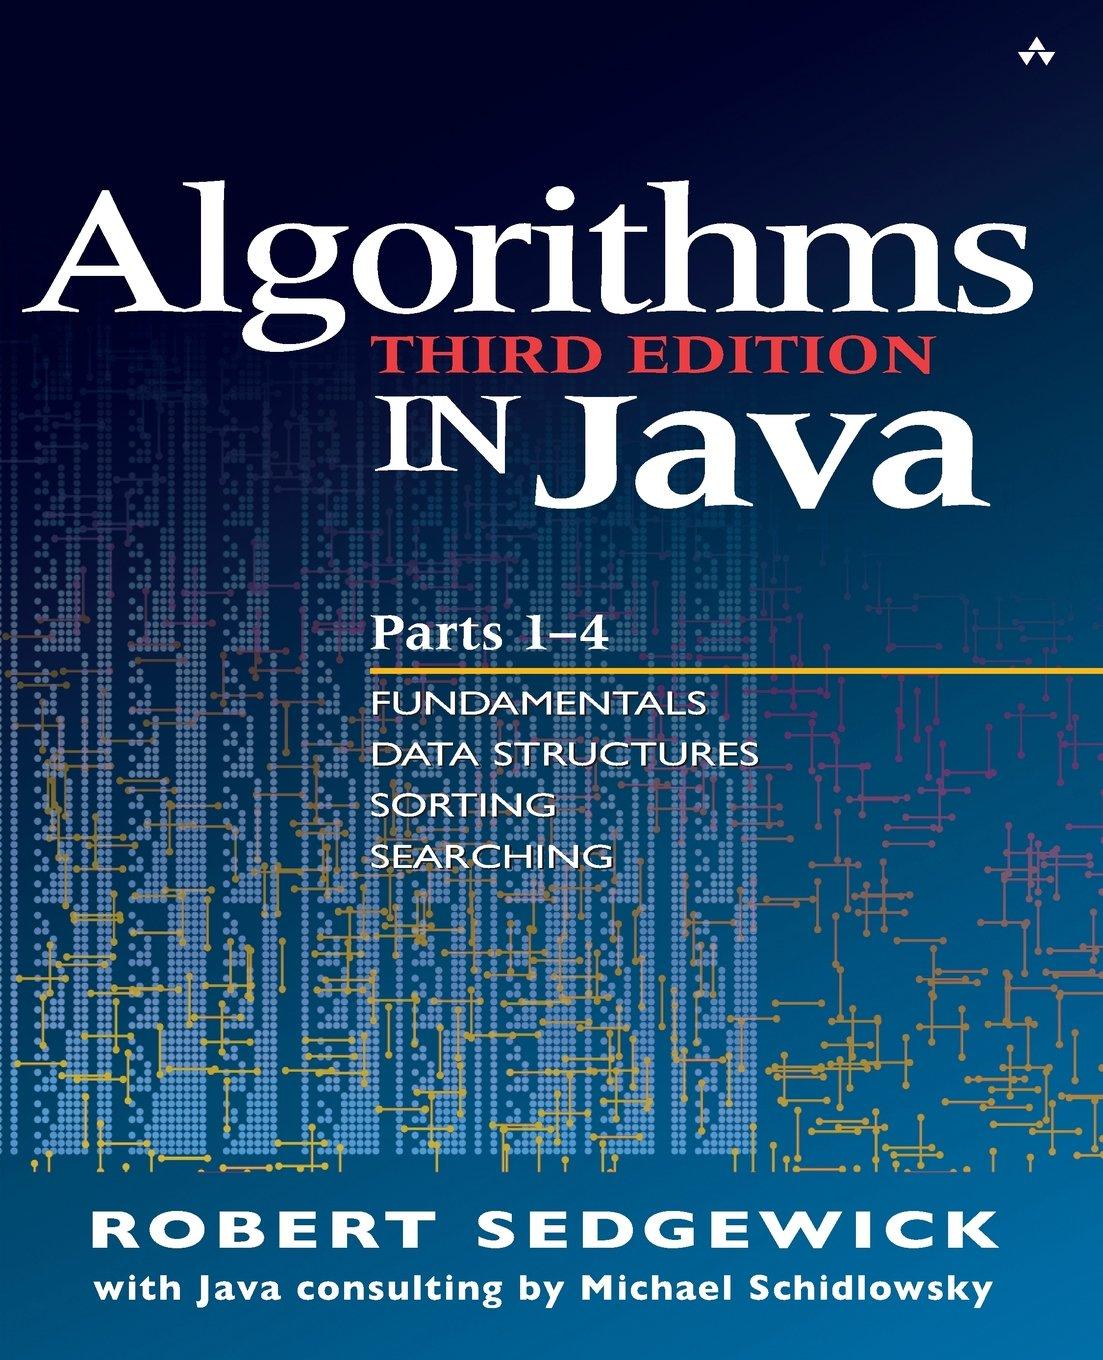 algorithms in java parts 1-4 3rd edition robert sedgewick, john fuller 0201361205, 9780201361209